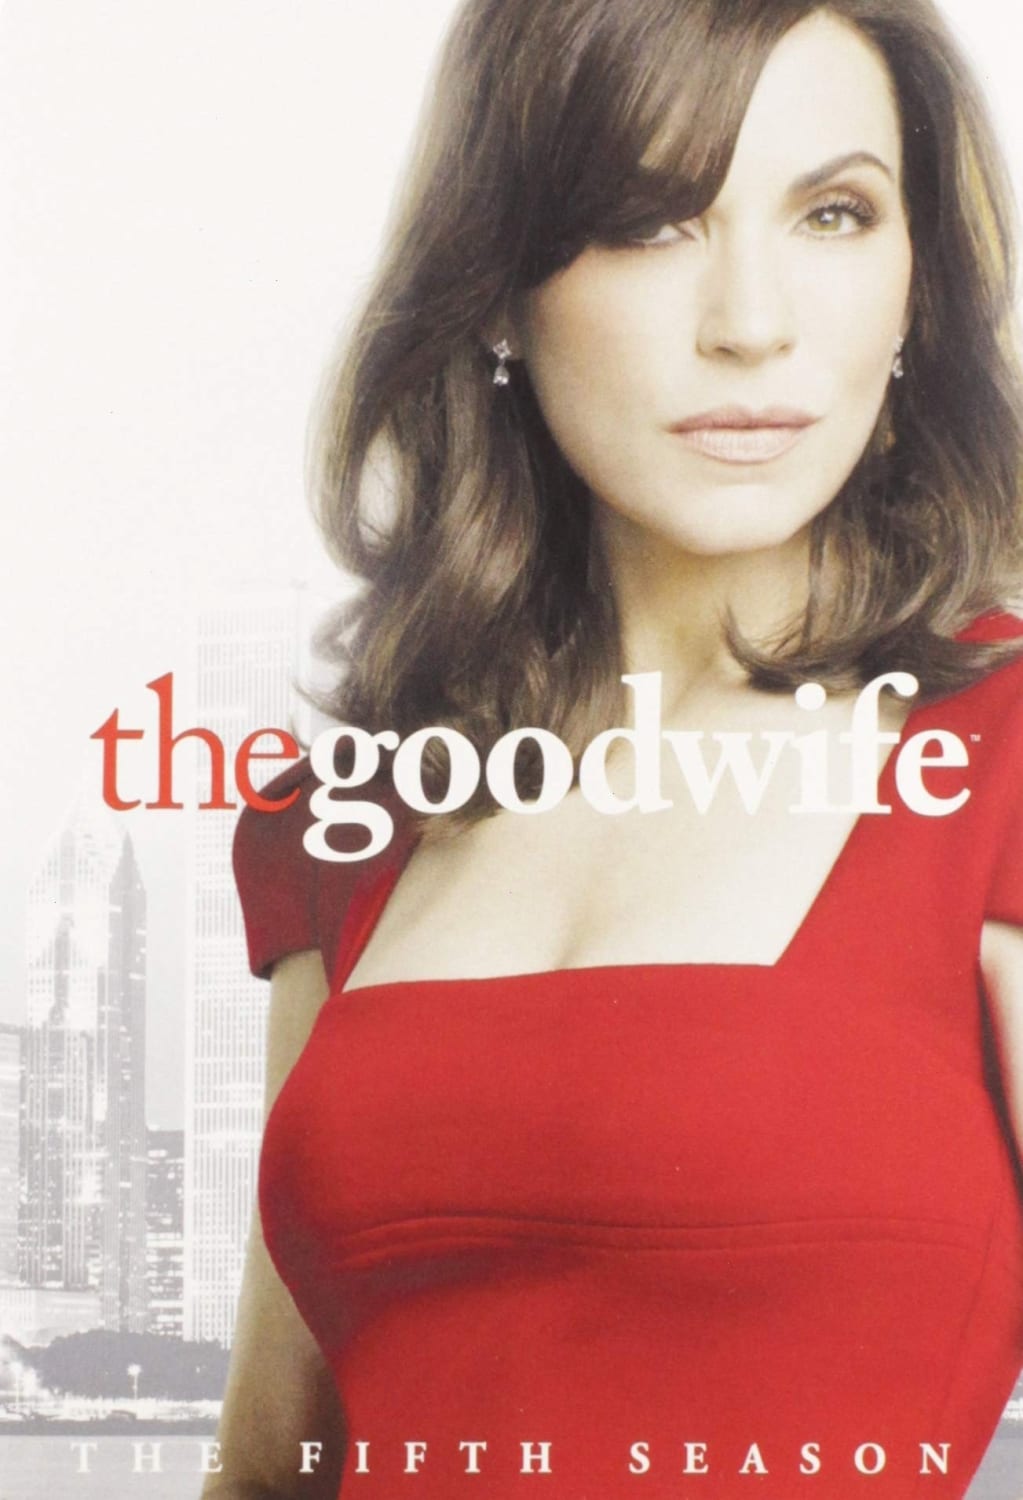 The Good Wife – Season 5 (DVD) on MovieShack